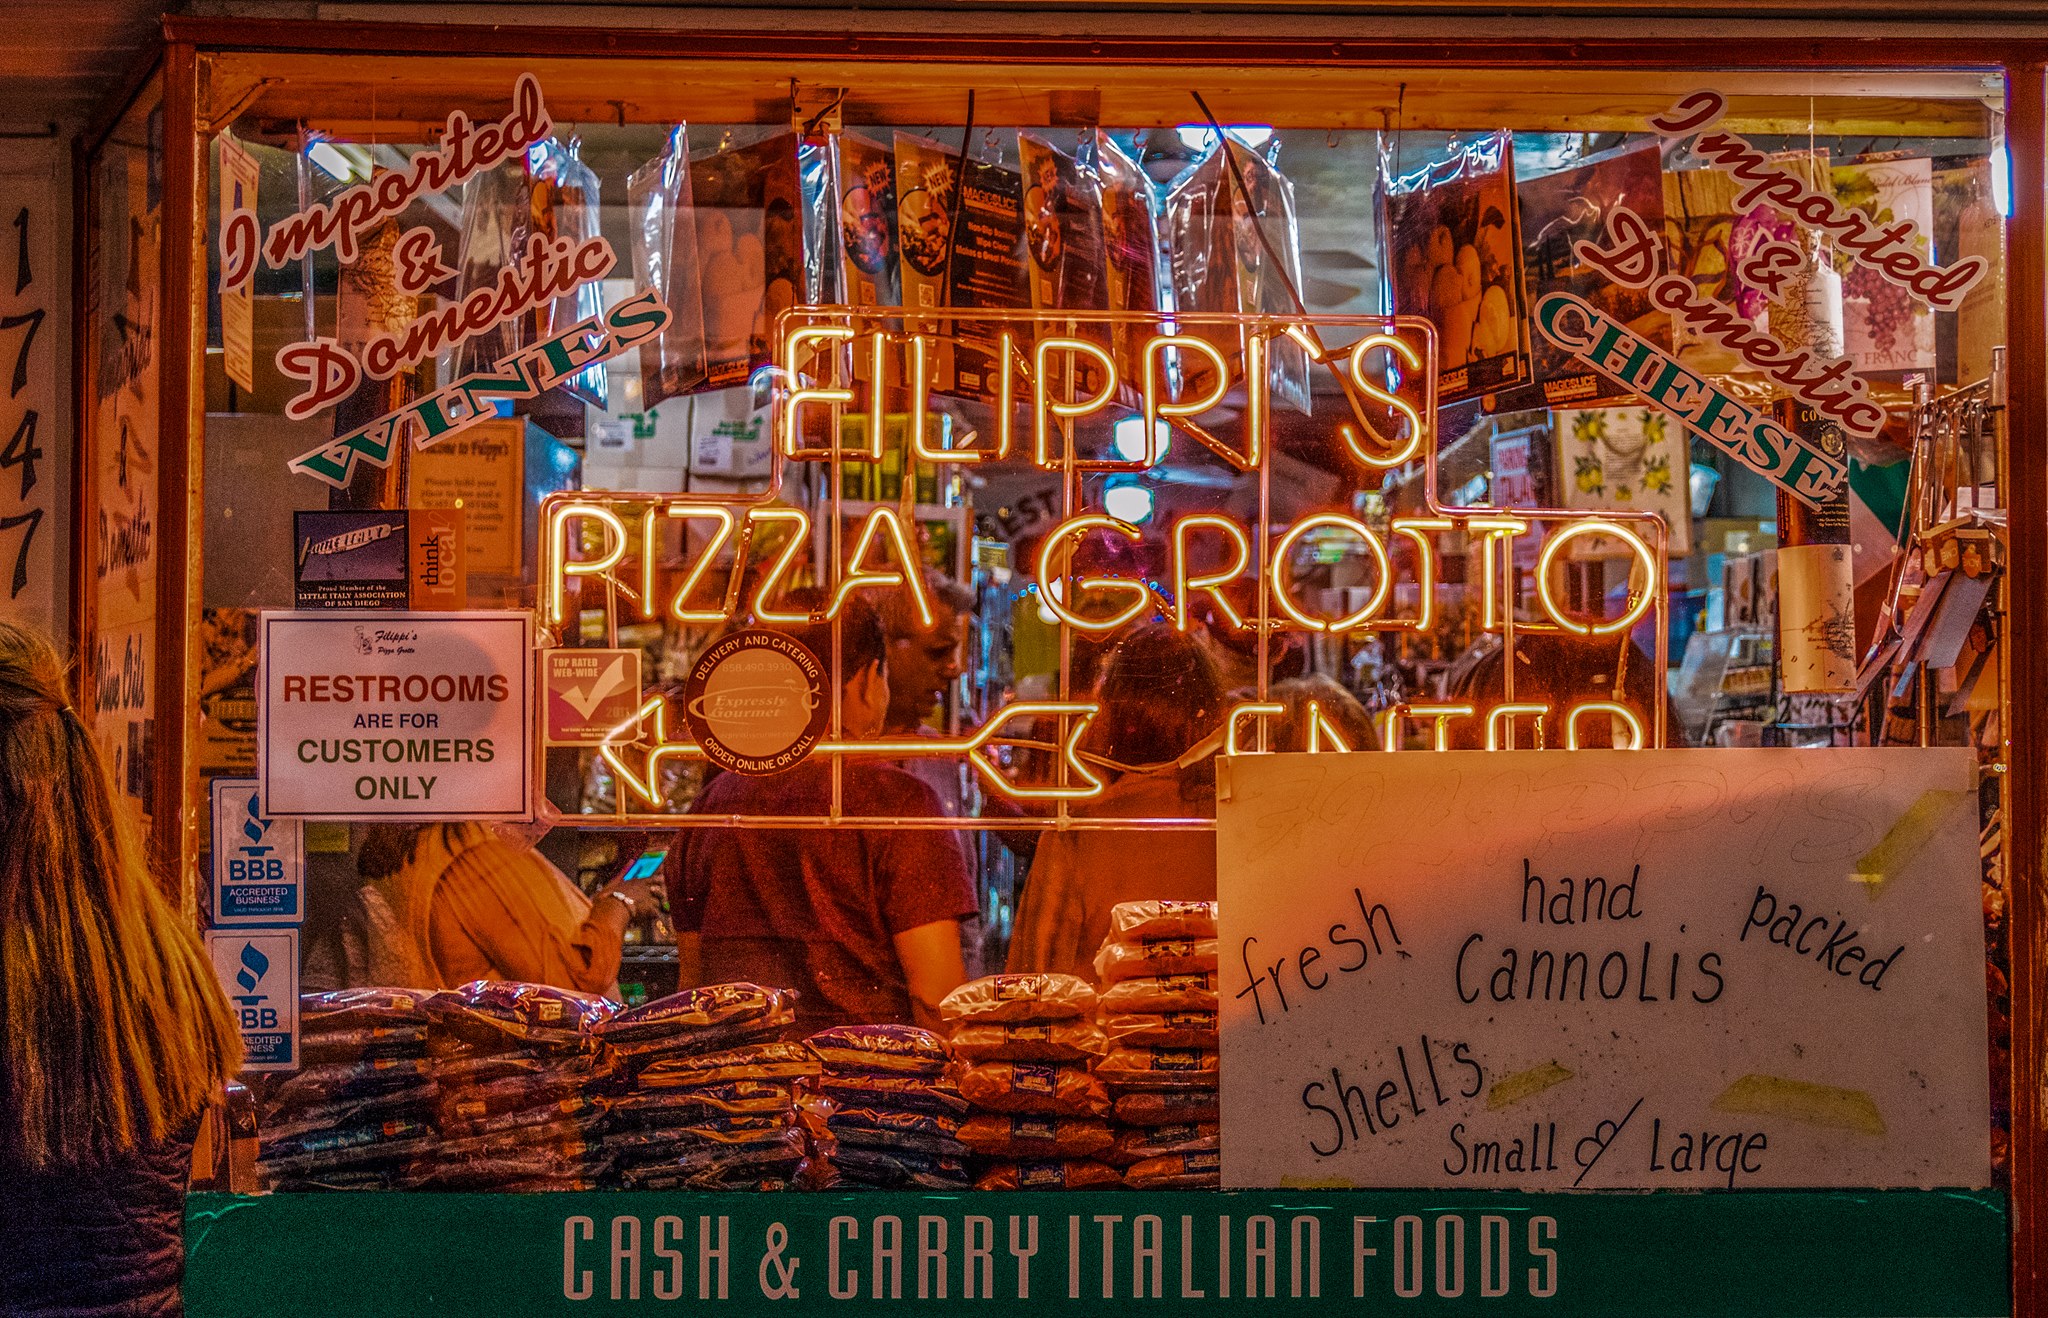 Italian Market, Filippi's Italian Market, filippi's pizza grotto